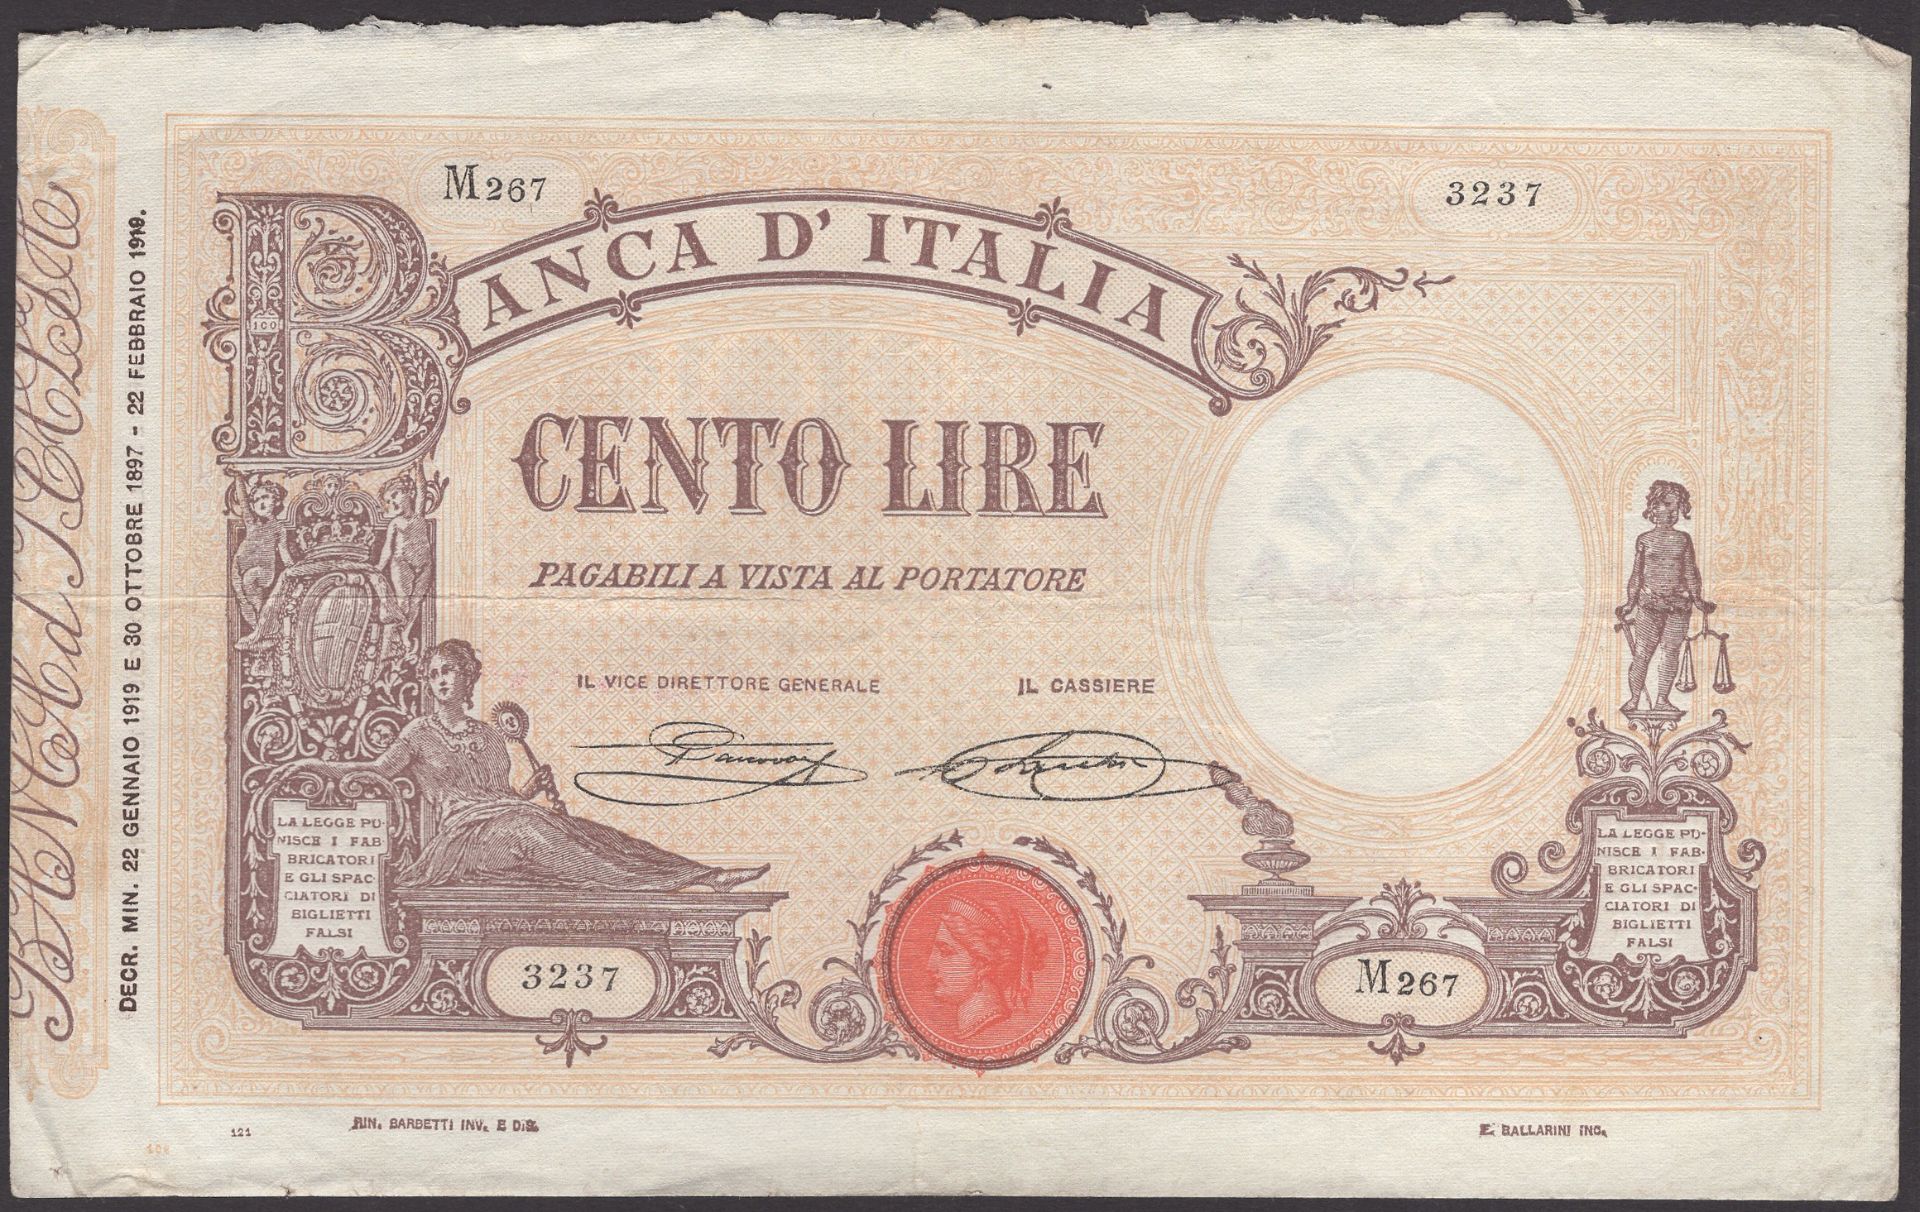 Banca d'Italia, 100 Lire, 22 January 1919, serial number M267 3237, Canovai and Saachi signa...